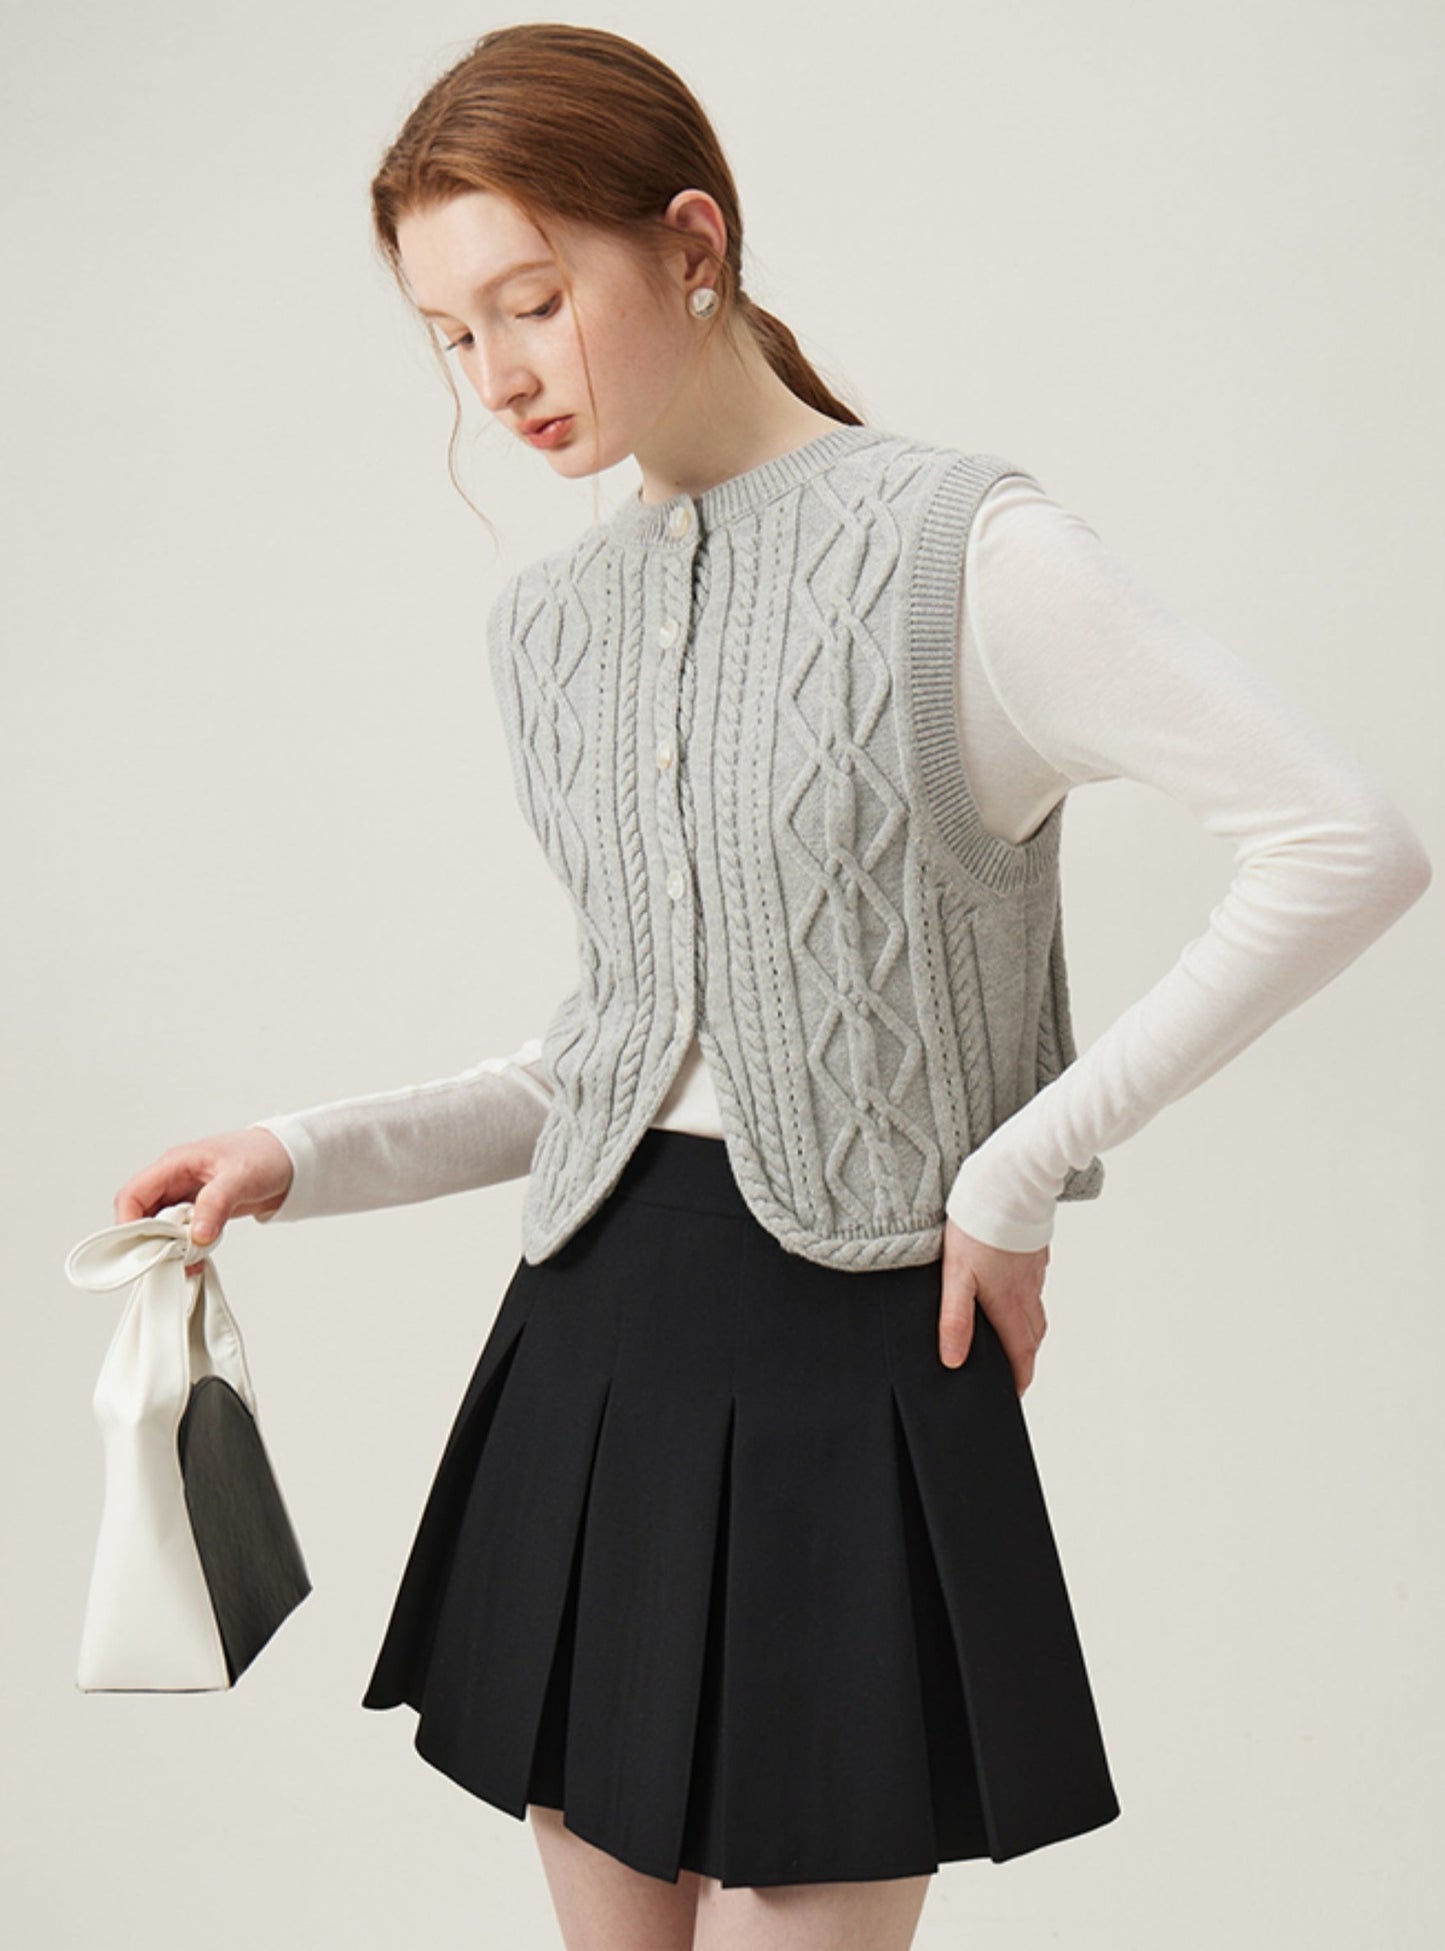 Knit Sweater Vest Jacket